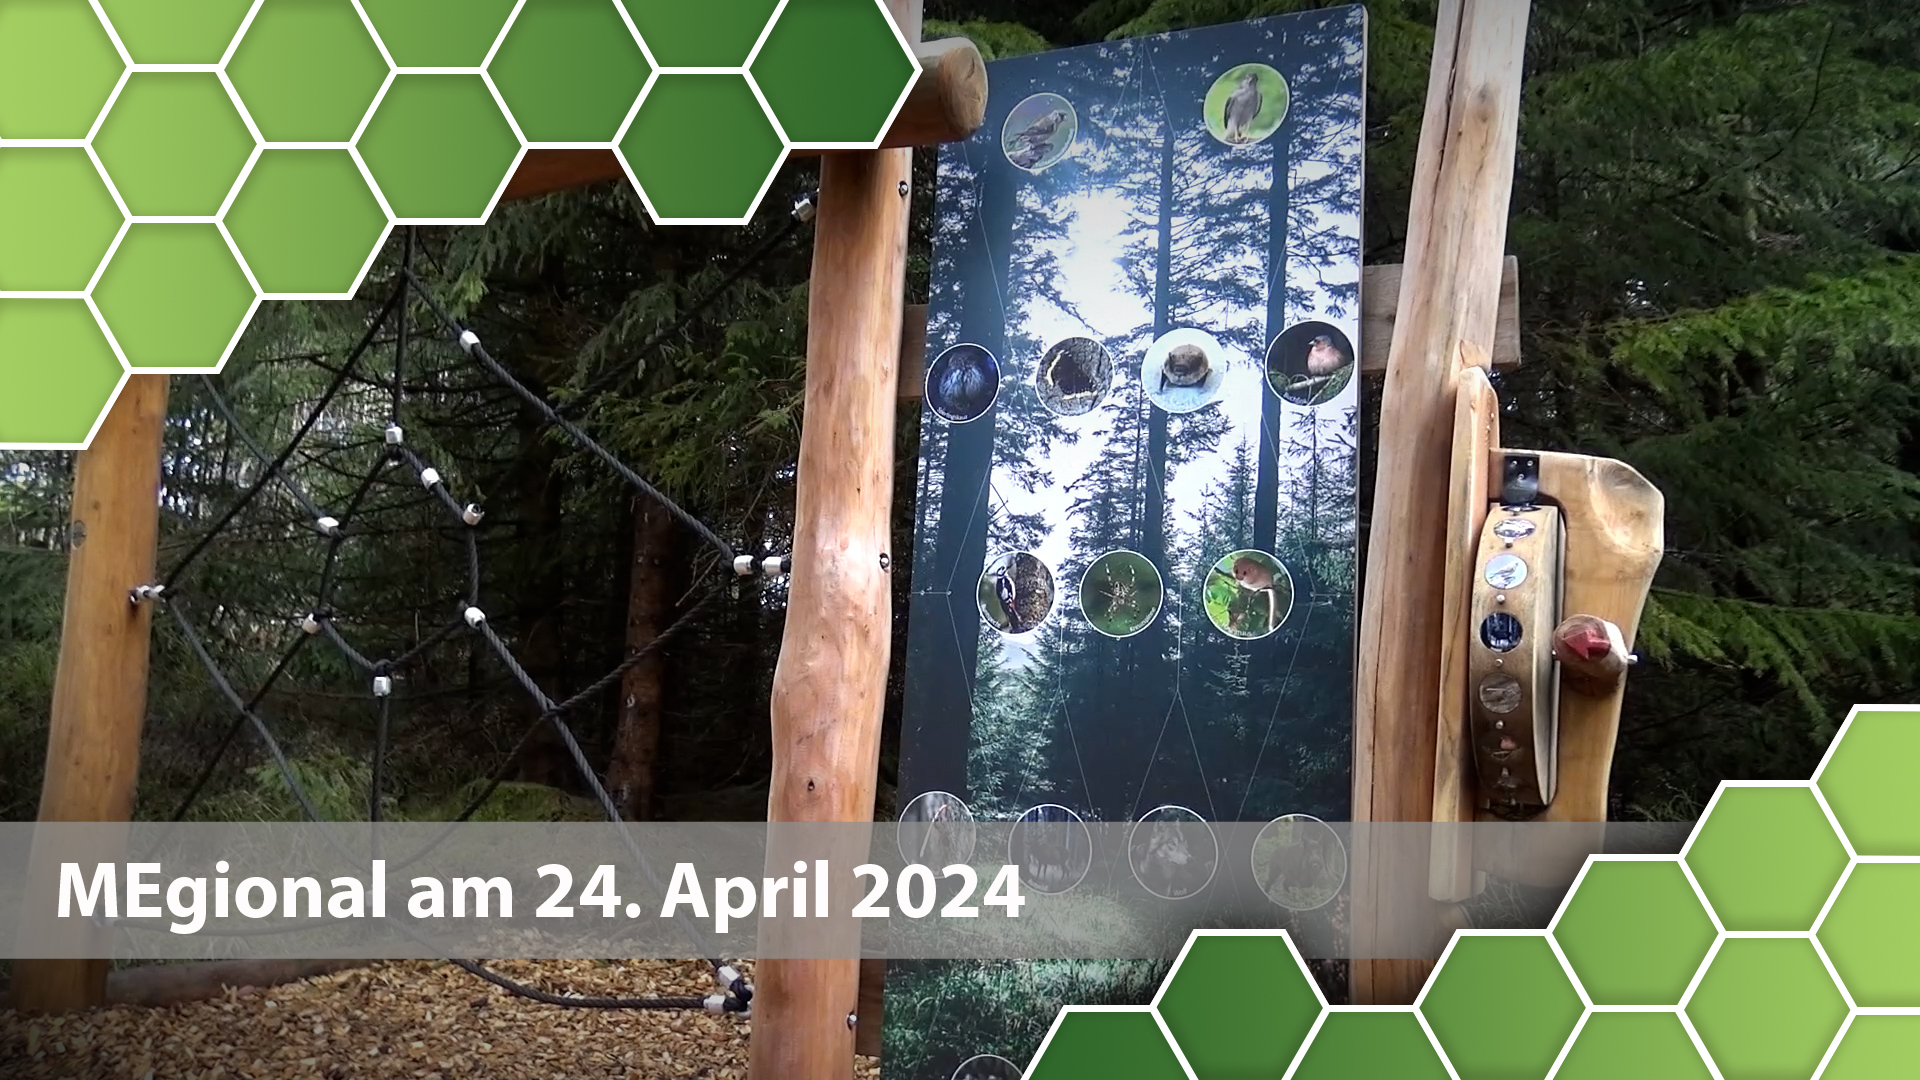 MEgional am 24. April 2024 mit dem Frühjahrsputz in Flöha